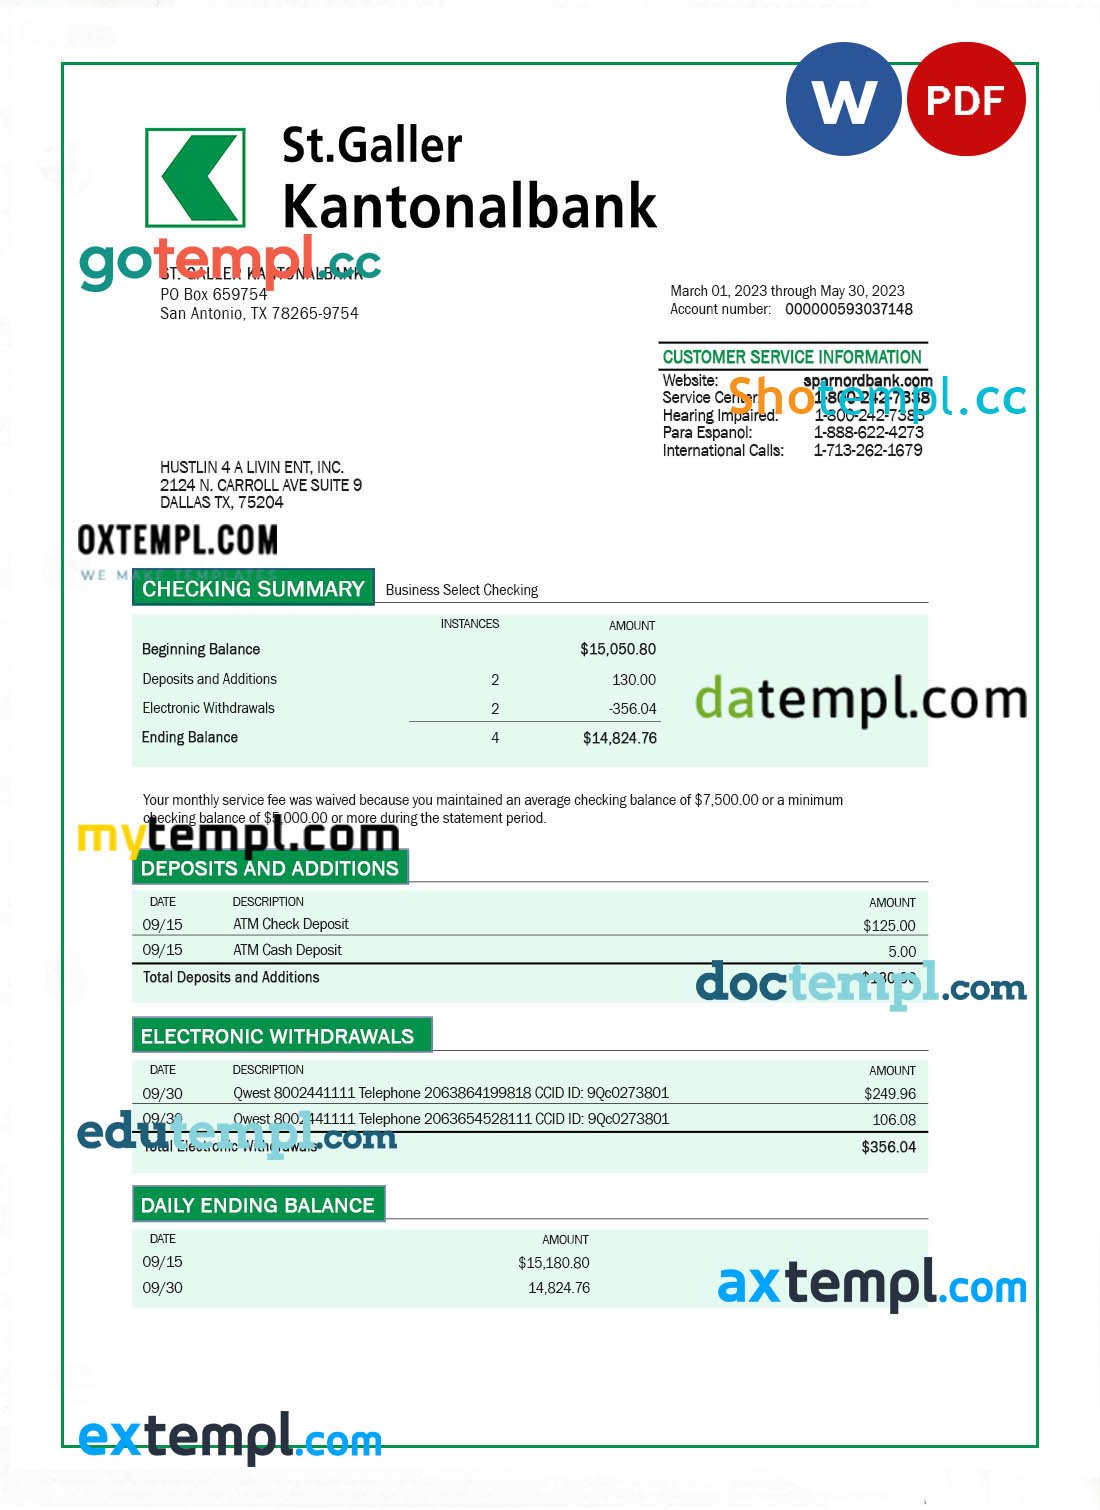 Mexico Registro de Poblacion de Mexico (CURP number) PSD template, fully editable